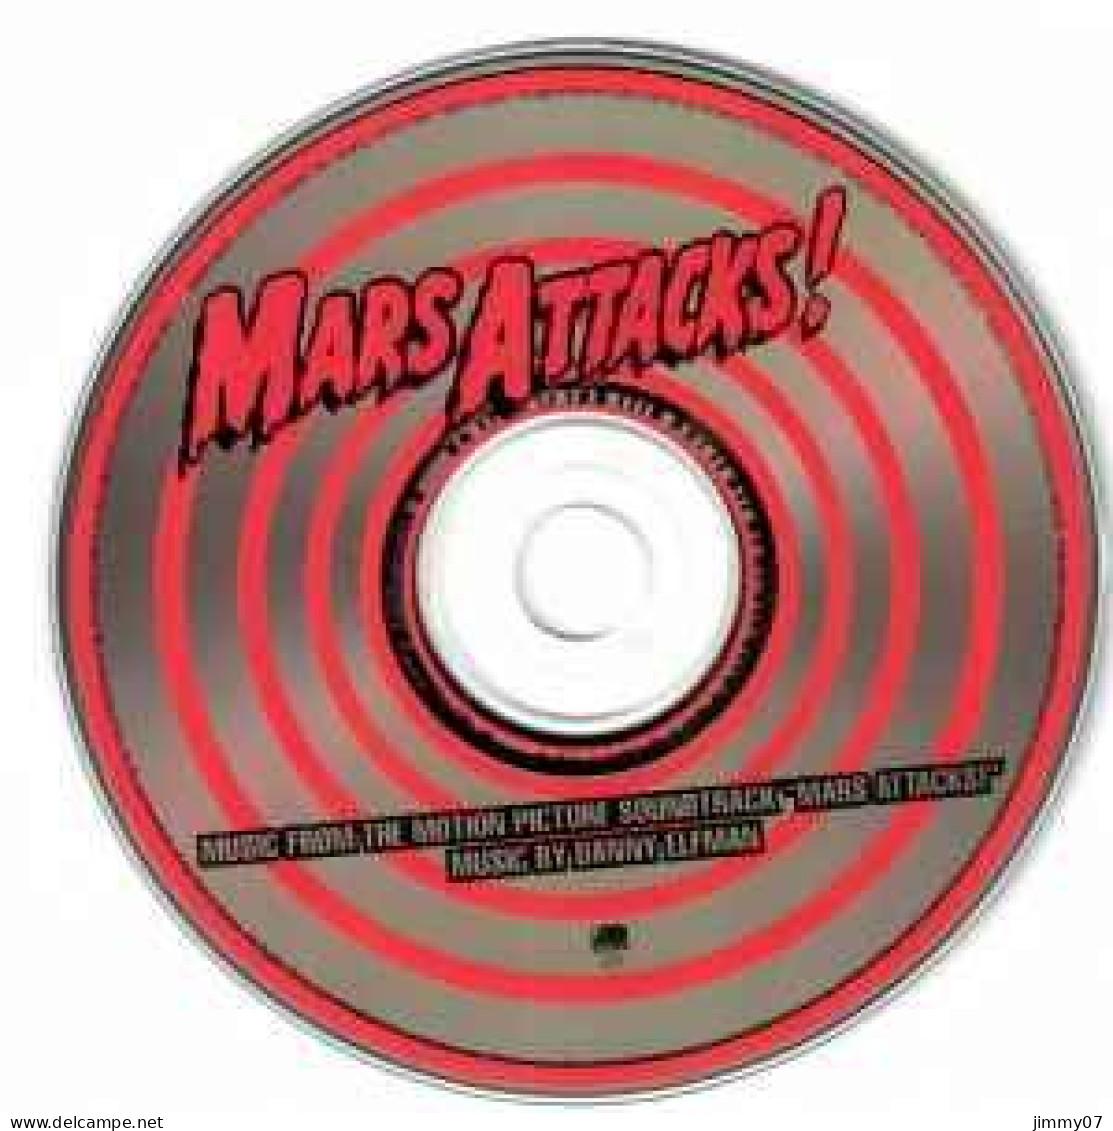 Danny Elfman - Mars Attacks! (Music From The Motion Picture Soundtrack) (CD, Album) - Música De Peliculas